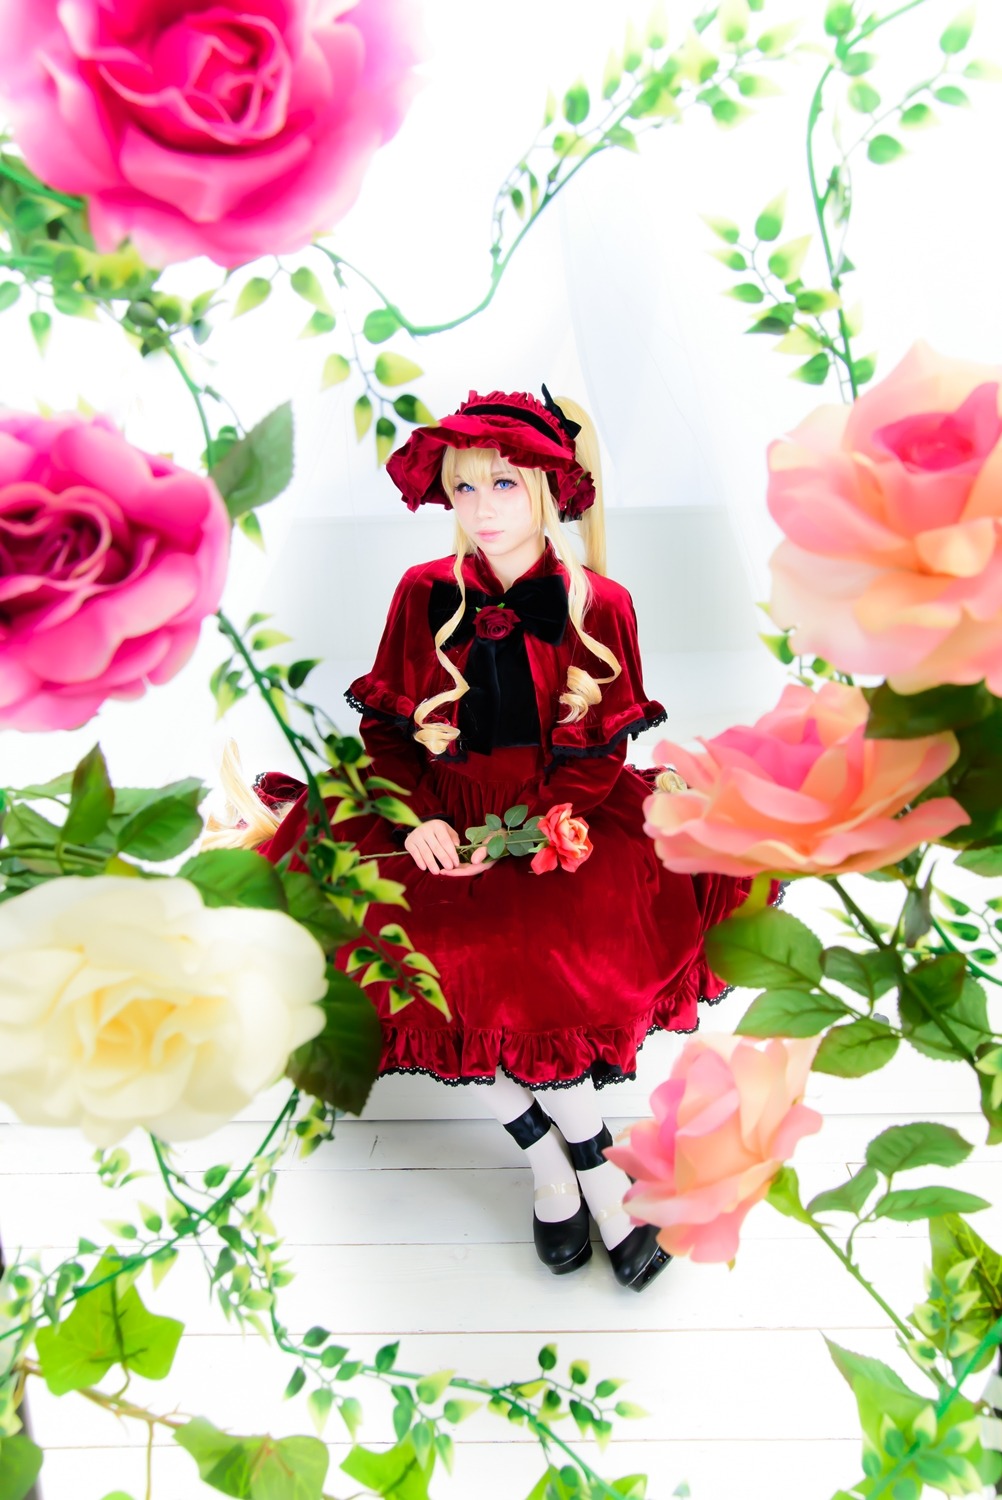 1girl black_footwear blonde_hair blue_eyes bonnet dress flower pink_rose red_dress red_flower red_rose rose shinku shoes solo